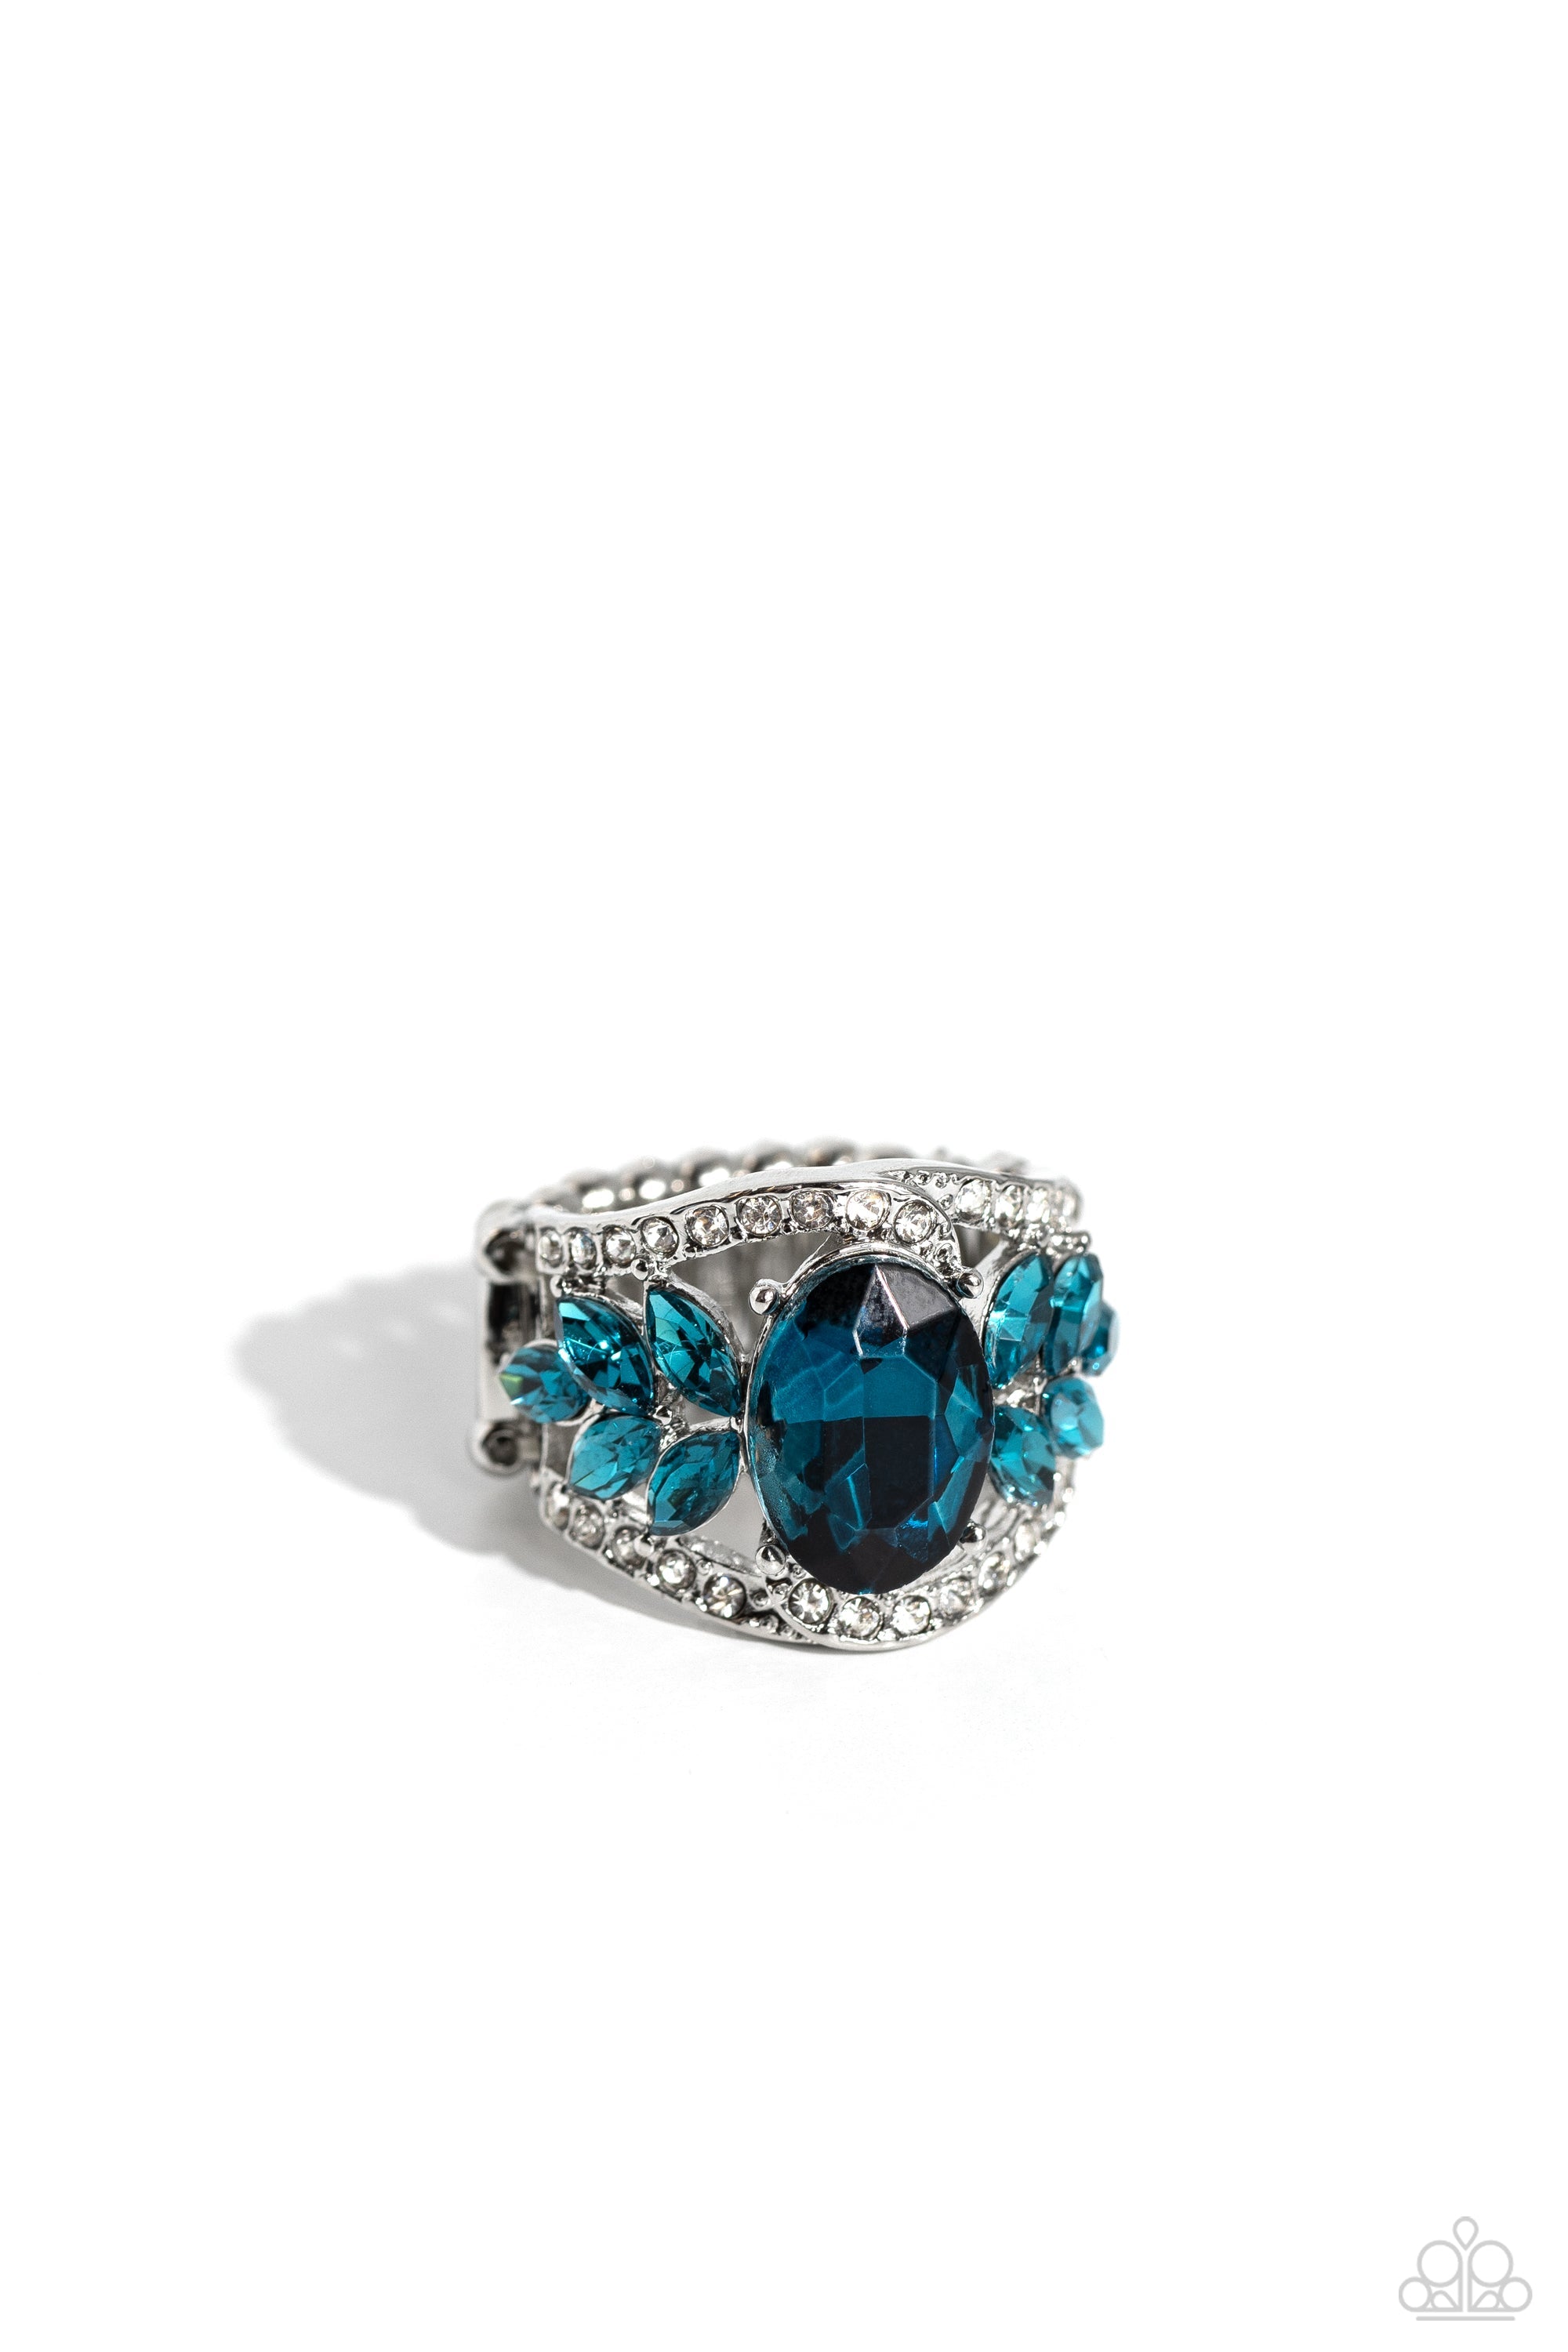 Cosmic Clique Blue Rhinestone Ring - Paparazzi Accessories- lightbox - CarasShop.com - $5 Jewelry by Cara Jewels